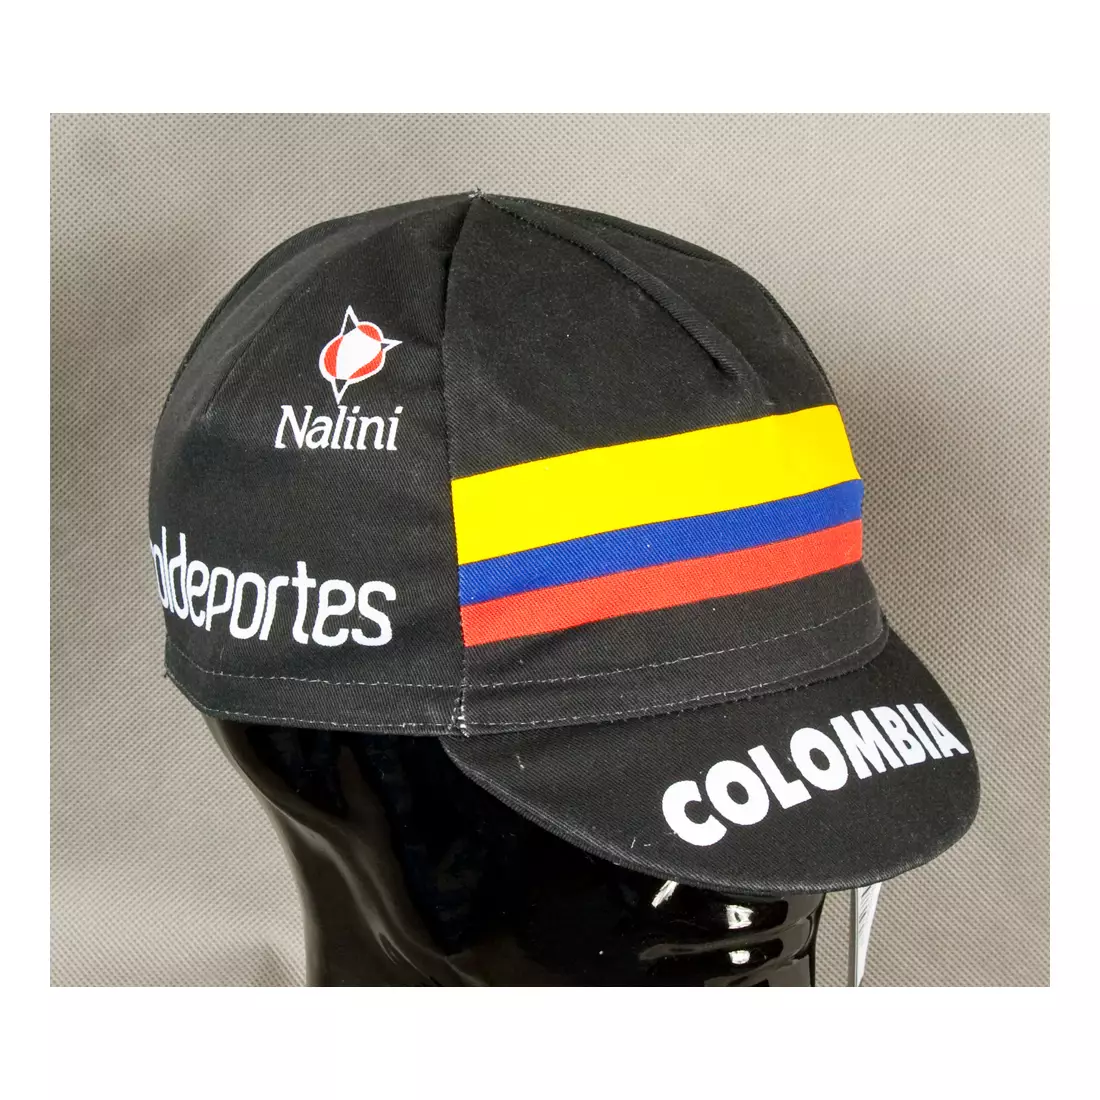 NALINI SS15 - TEAM COLOMBIA 2015 – kap